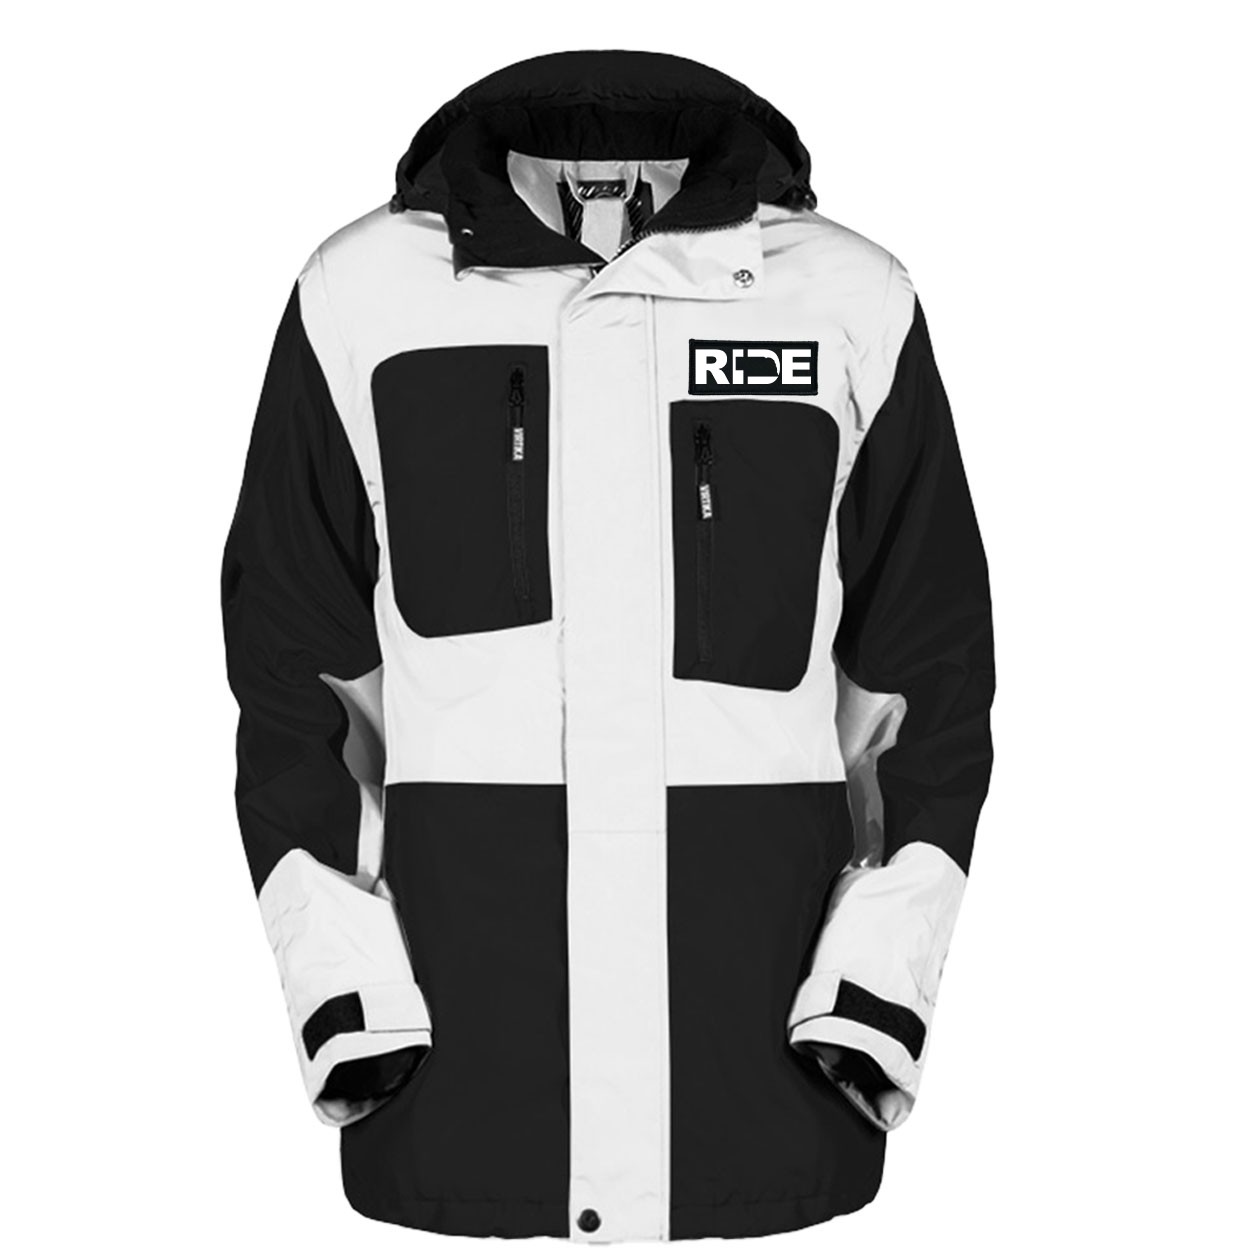 Ride Nebraska Classic Woven Patch Pro Snowboard Jacket (Black/White)